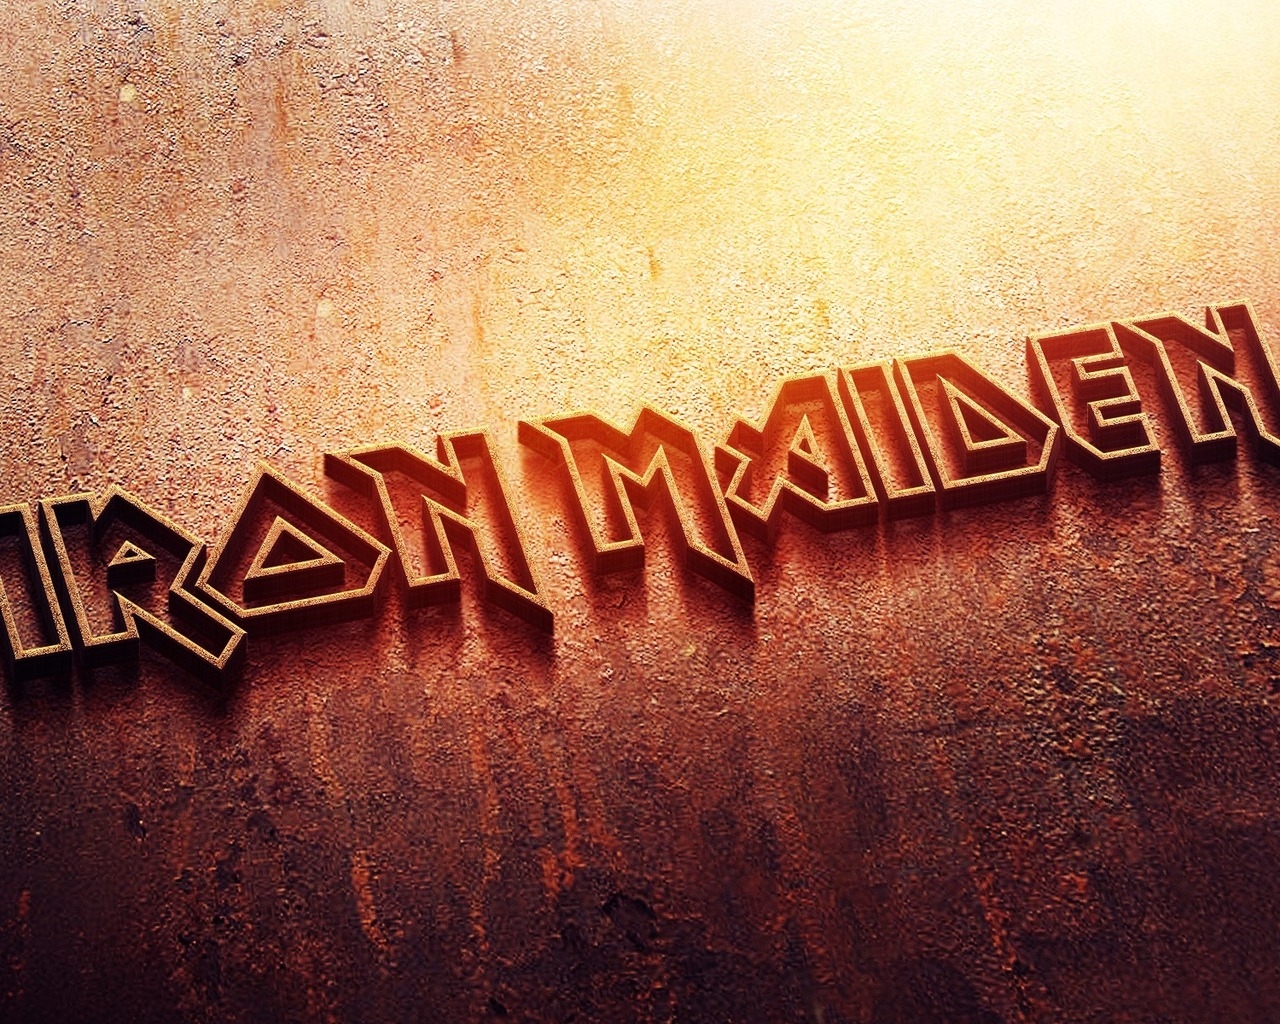 Iron Maiden Logo for 1280 x 1024 resolution